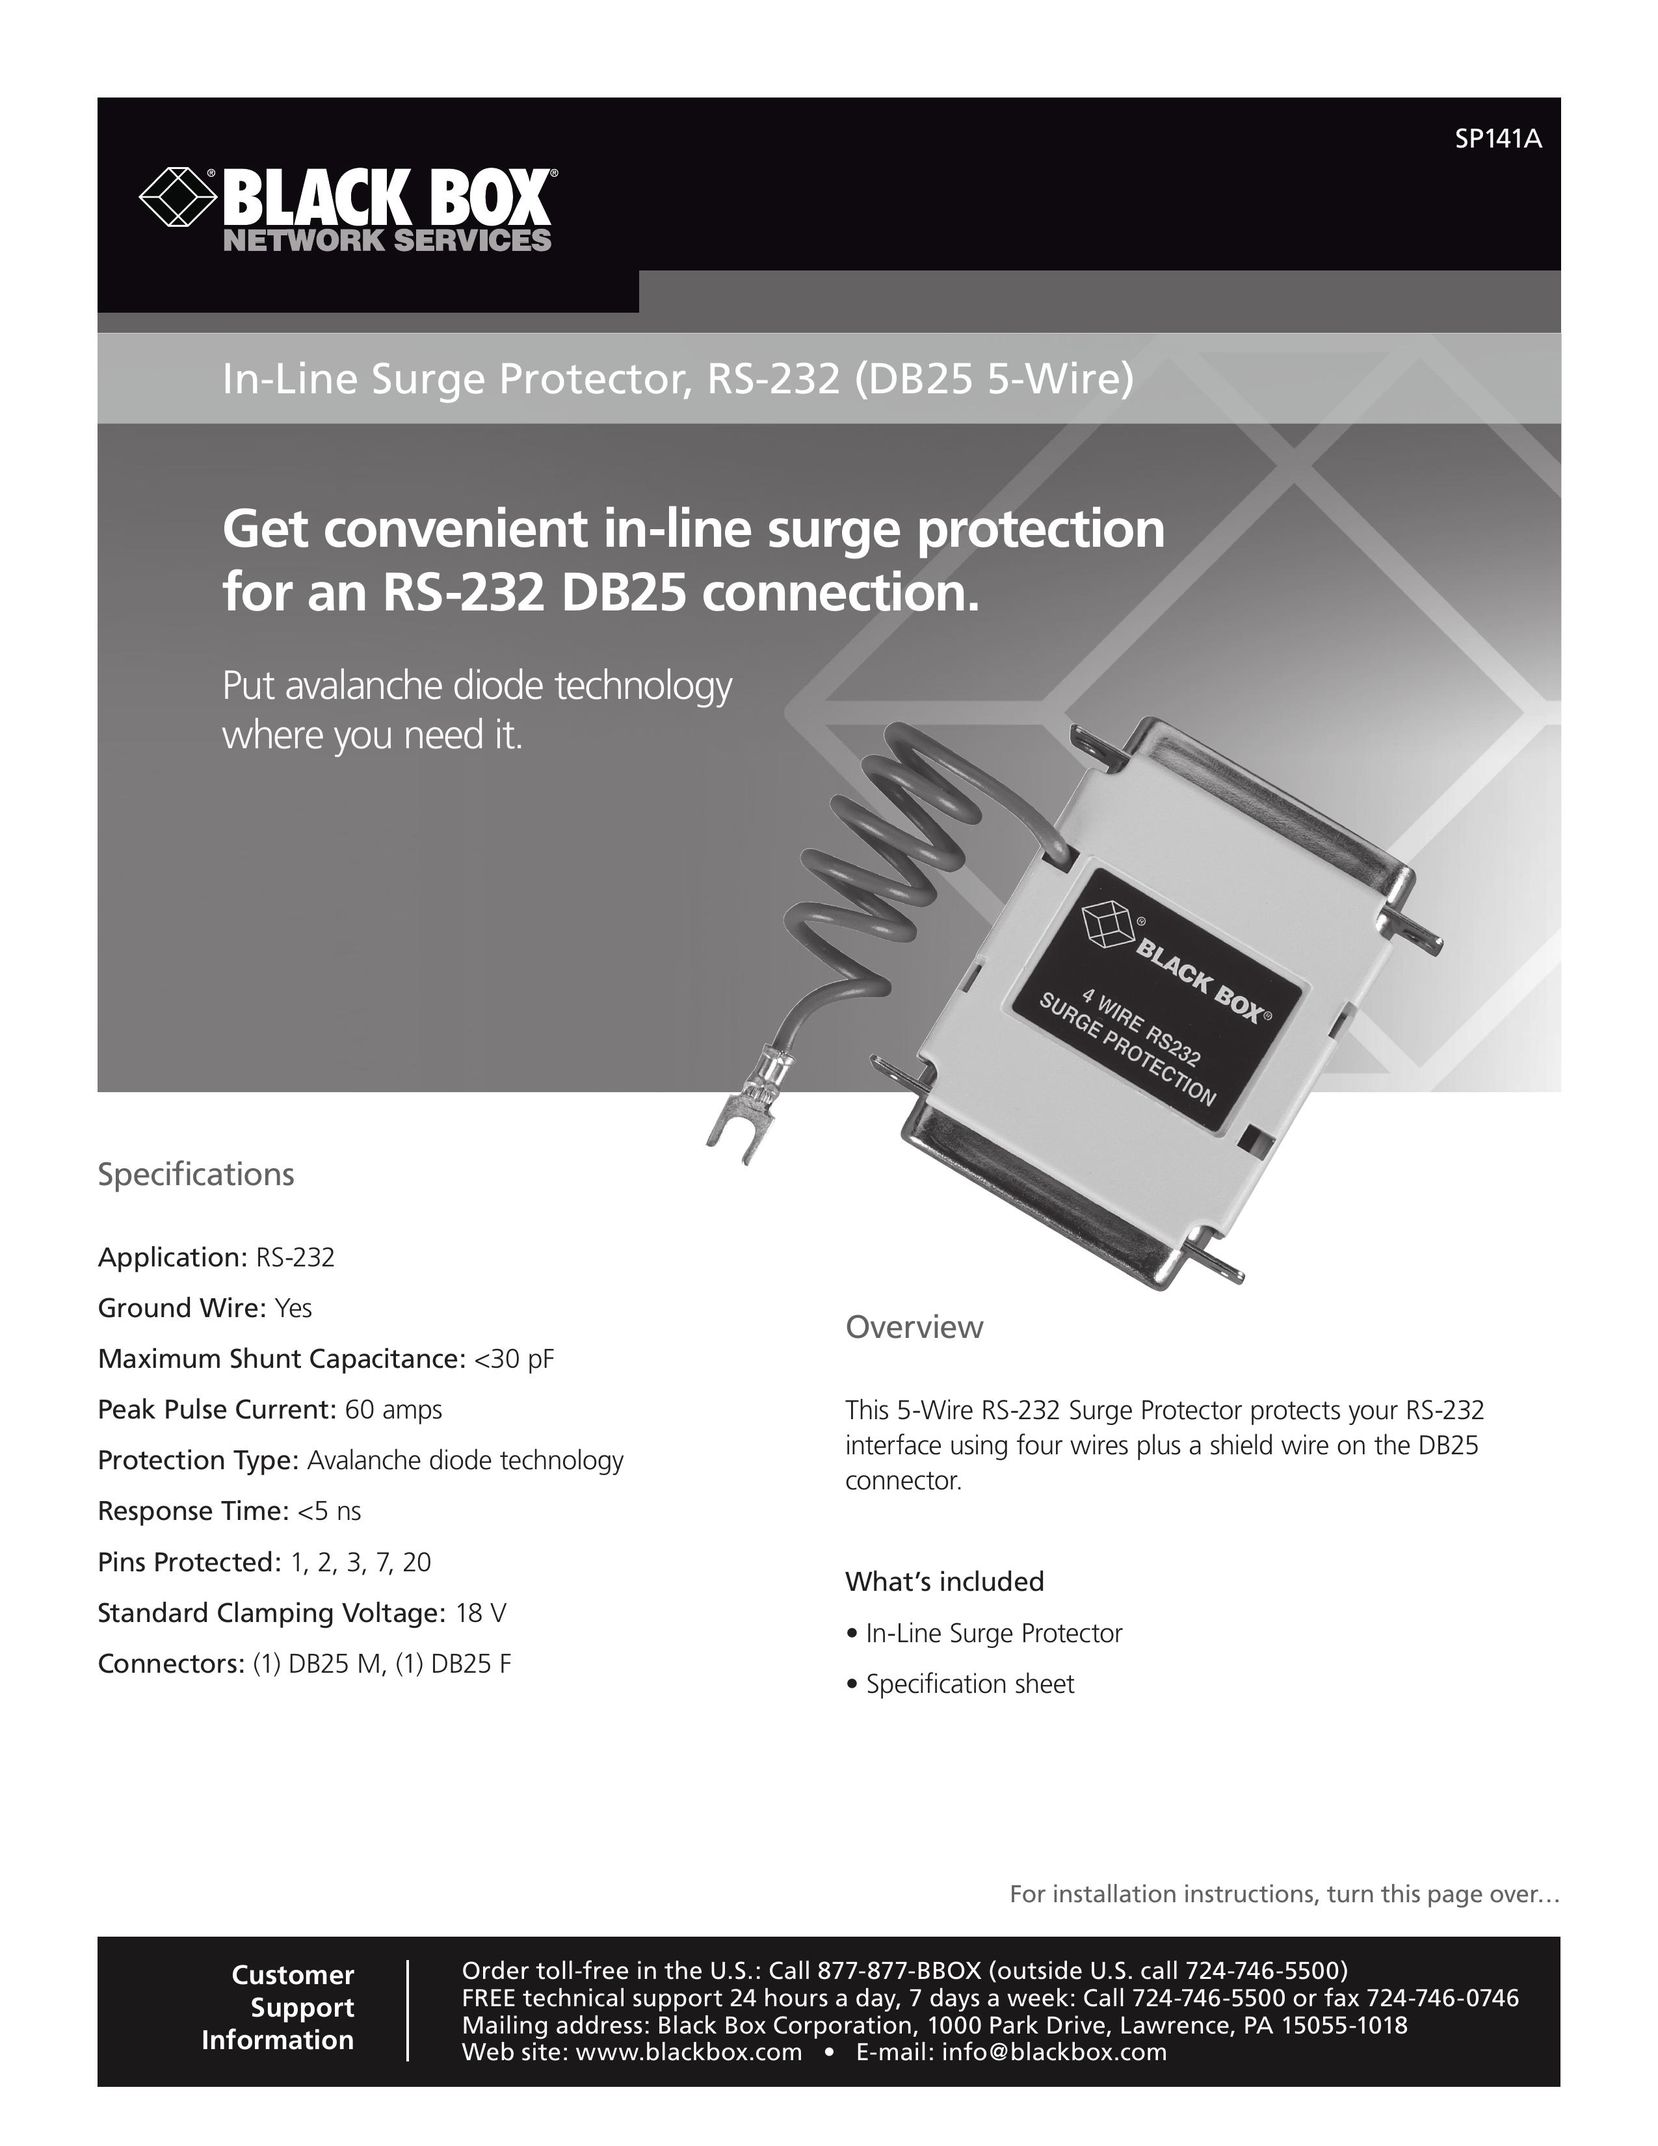 Black Box SP141A Surge Protector User Manual